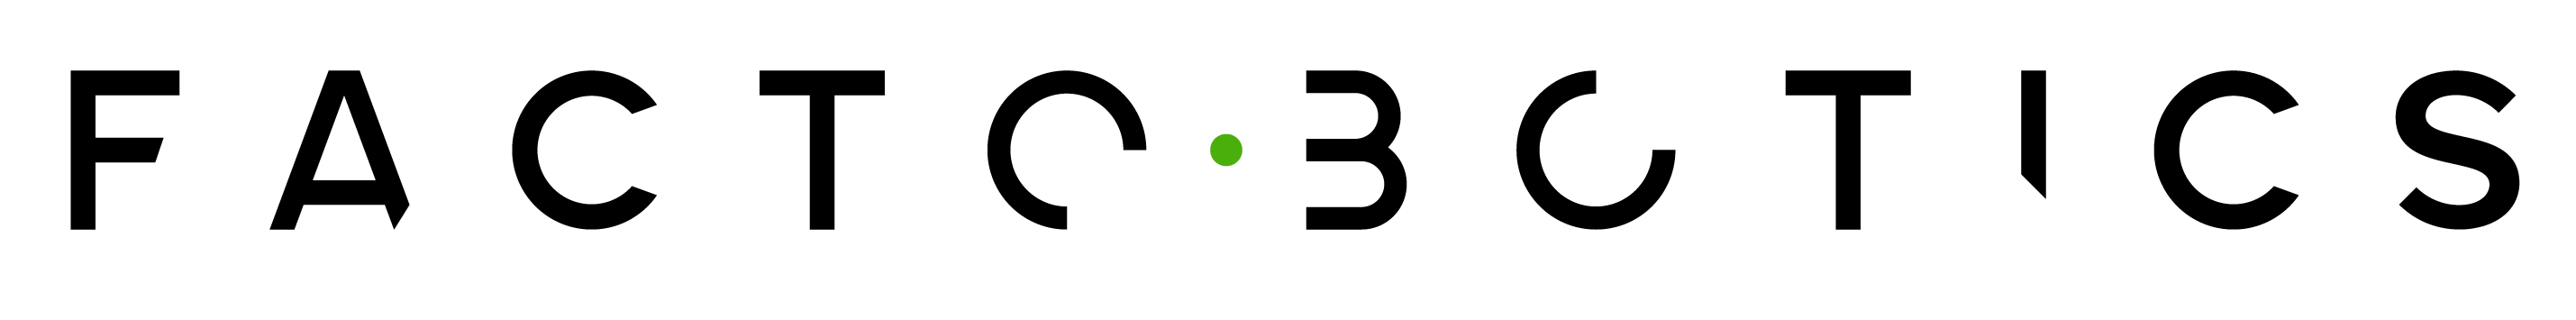 factobotics_logo